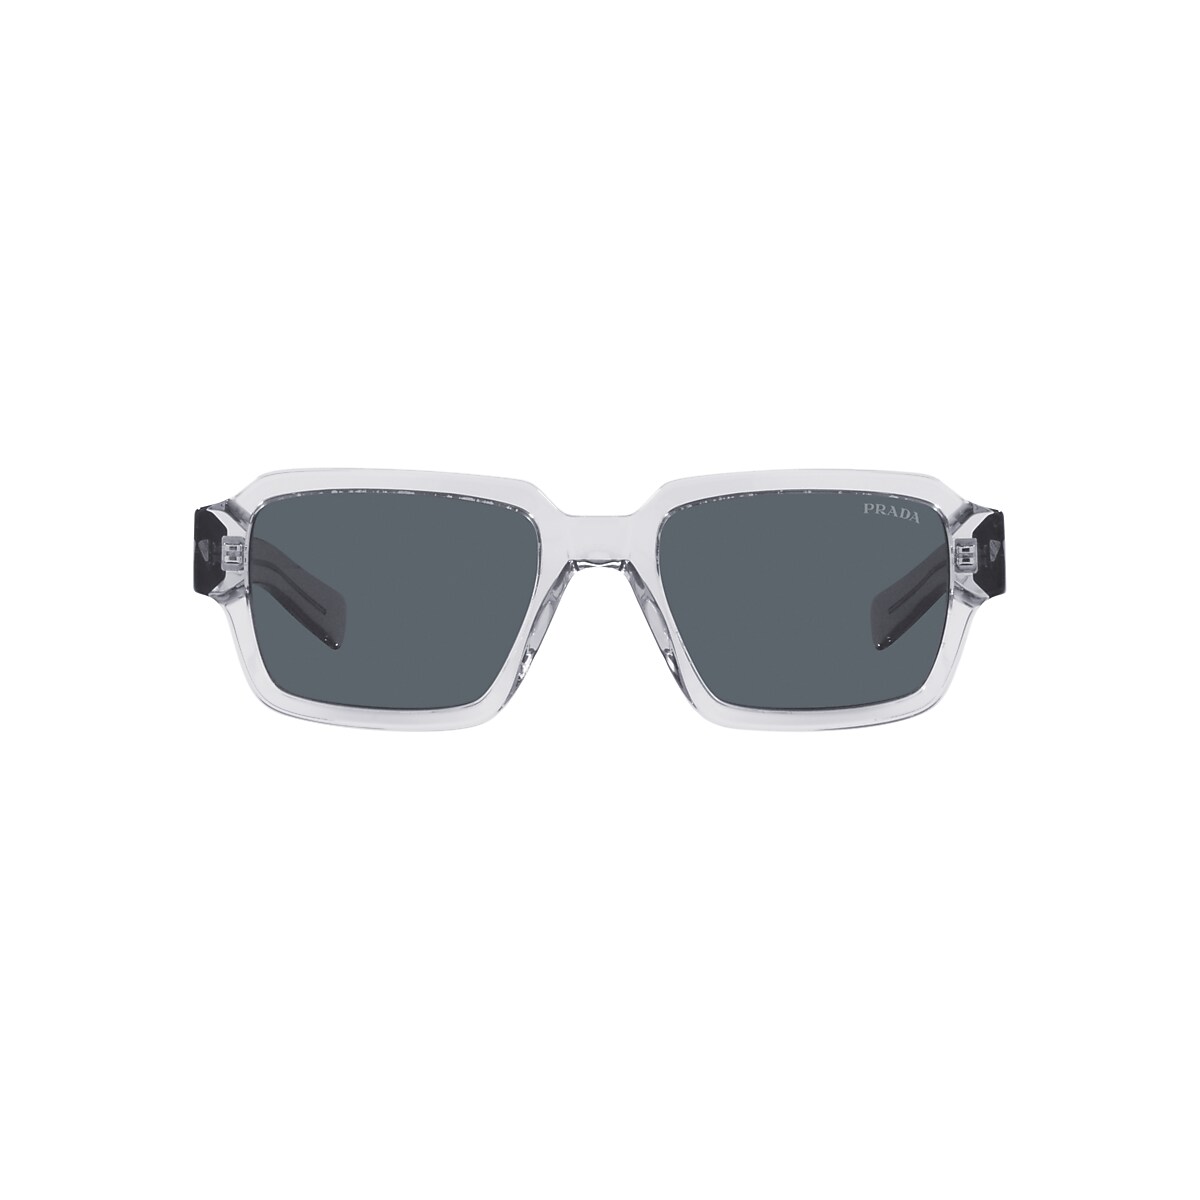 Louis Vuitton Mens Sunglasses, Grey, Free